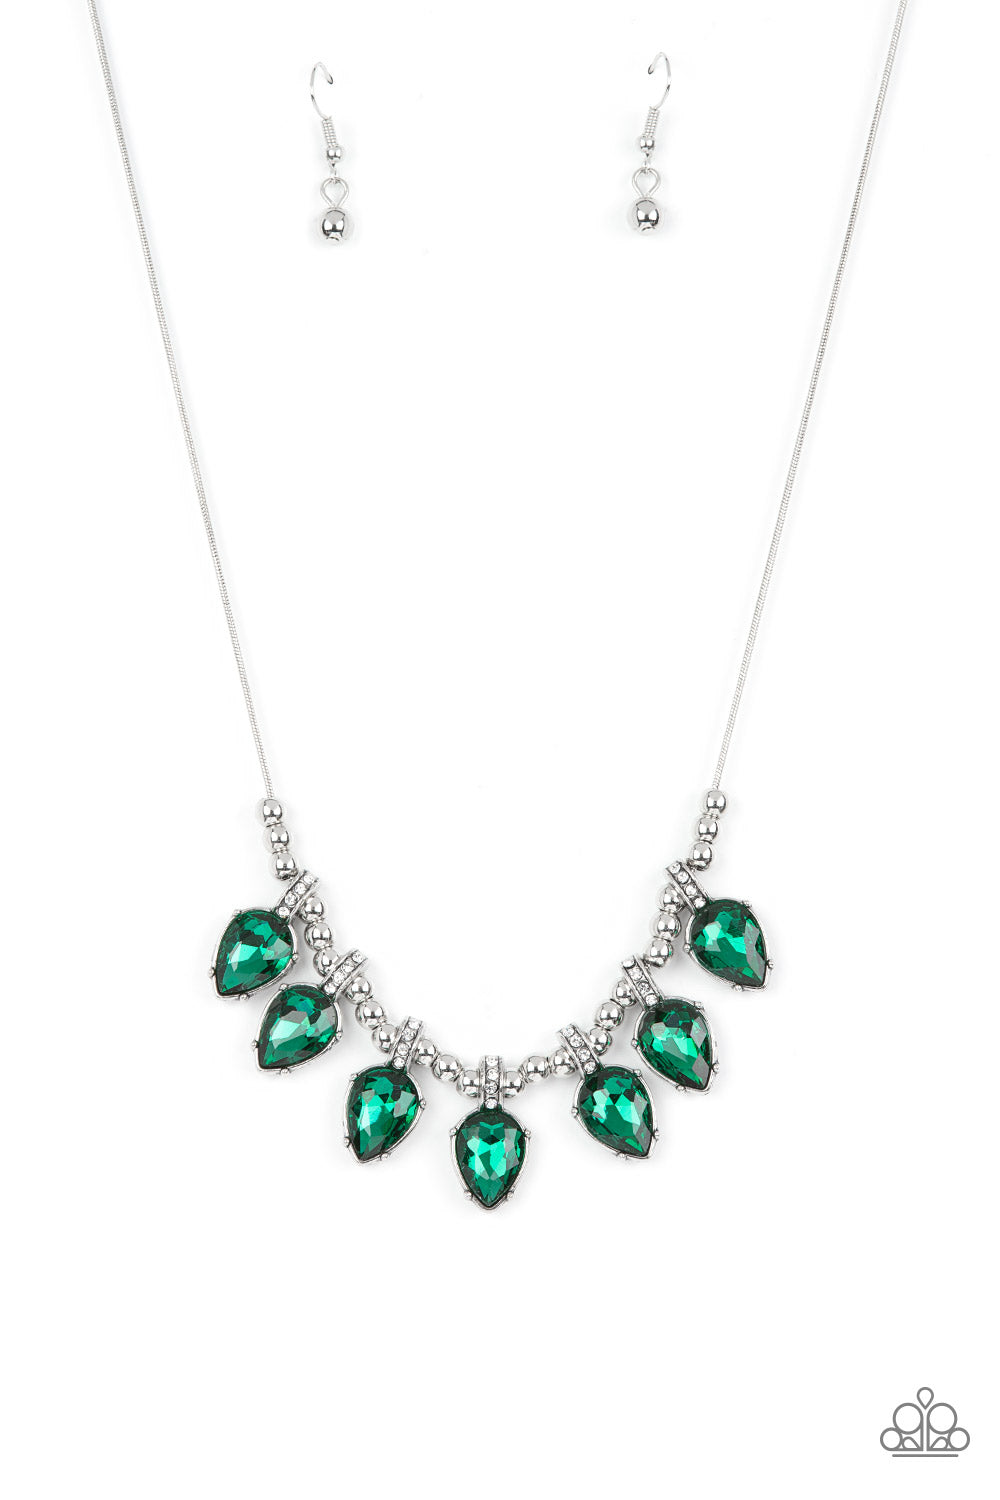 Crown Jewel Couture - Green Necklace freeshipping - JewLz4u Gemstone Gallery